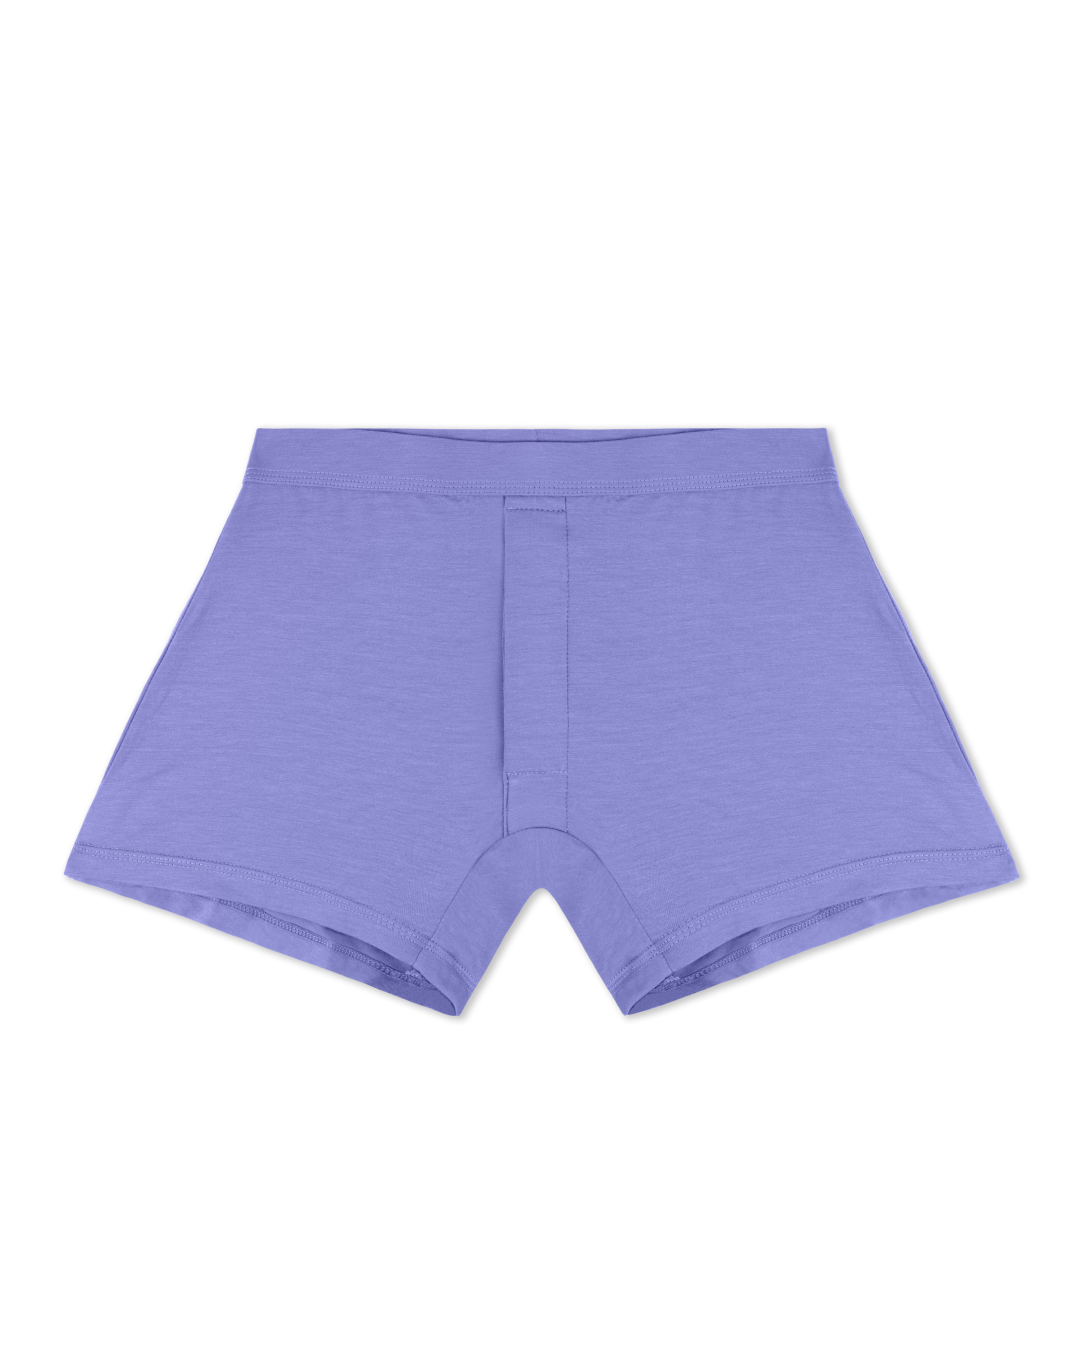 Ollie Boxer Shorts - Digital Lavender